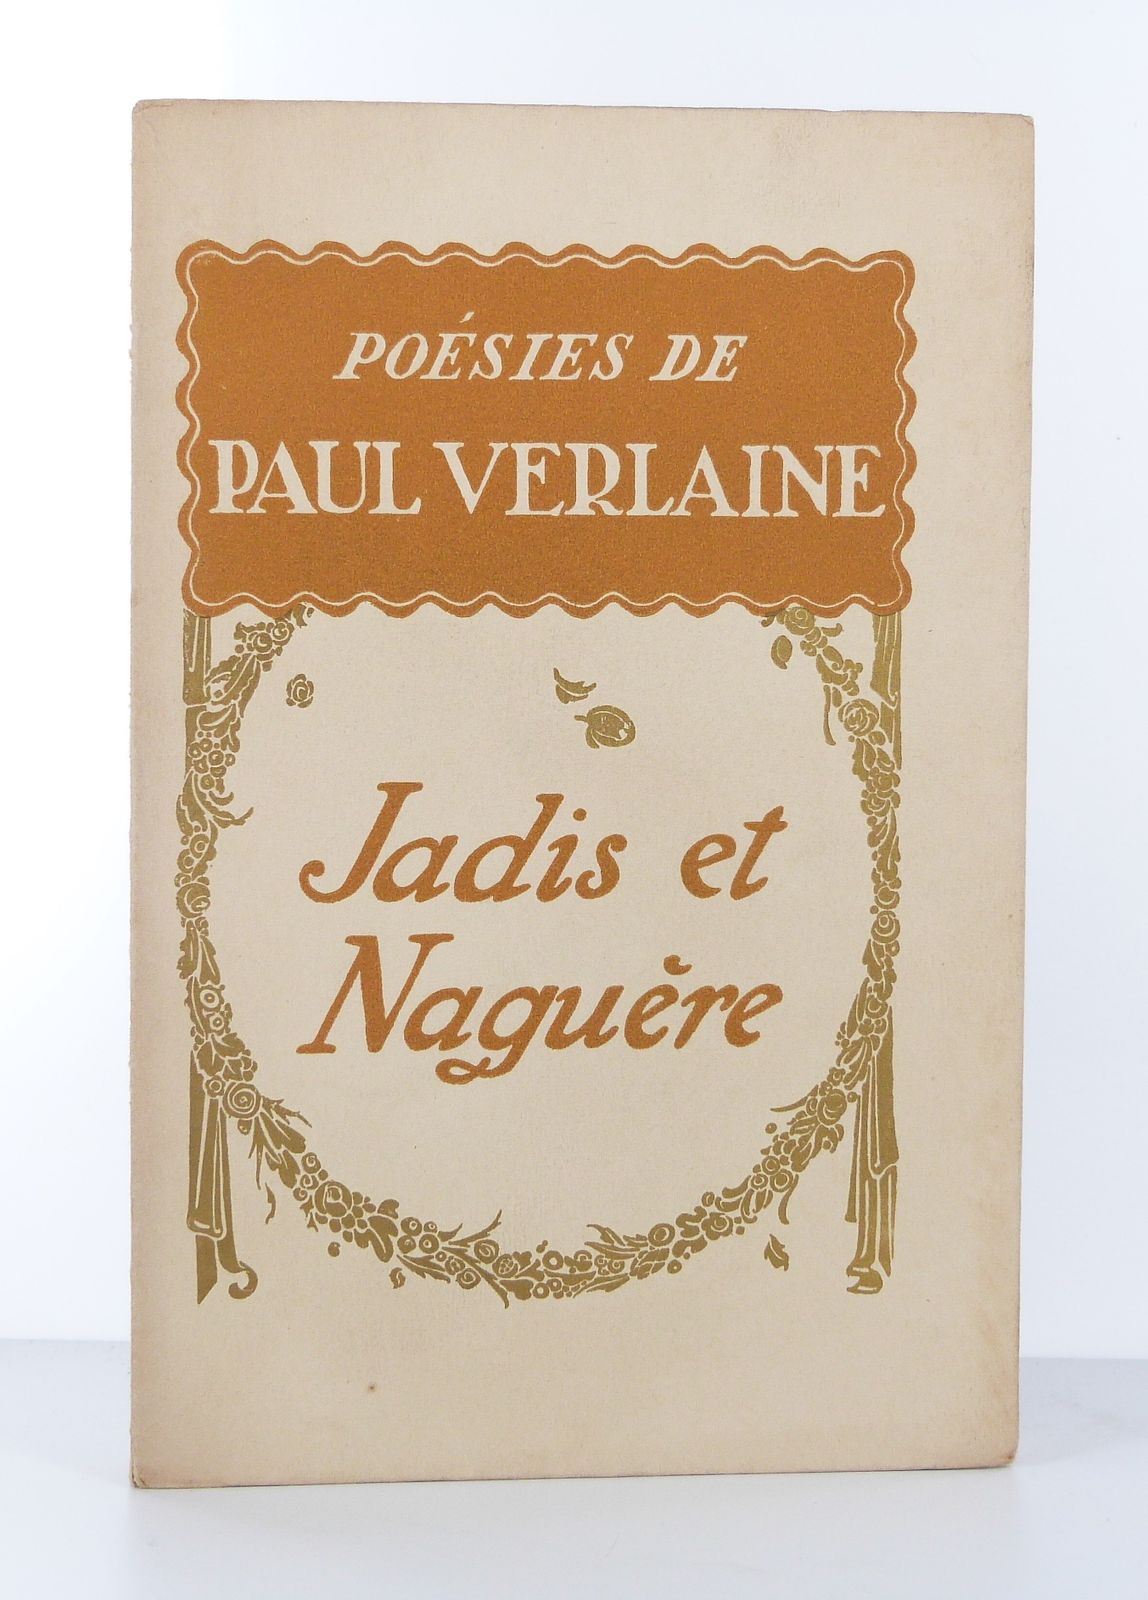 Verlaine poems erotic